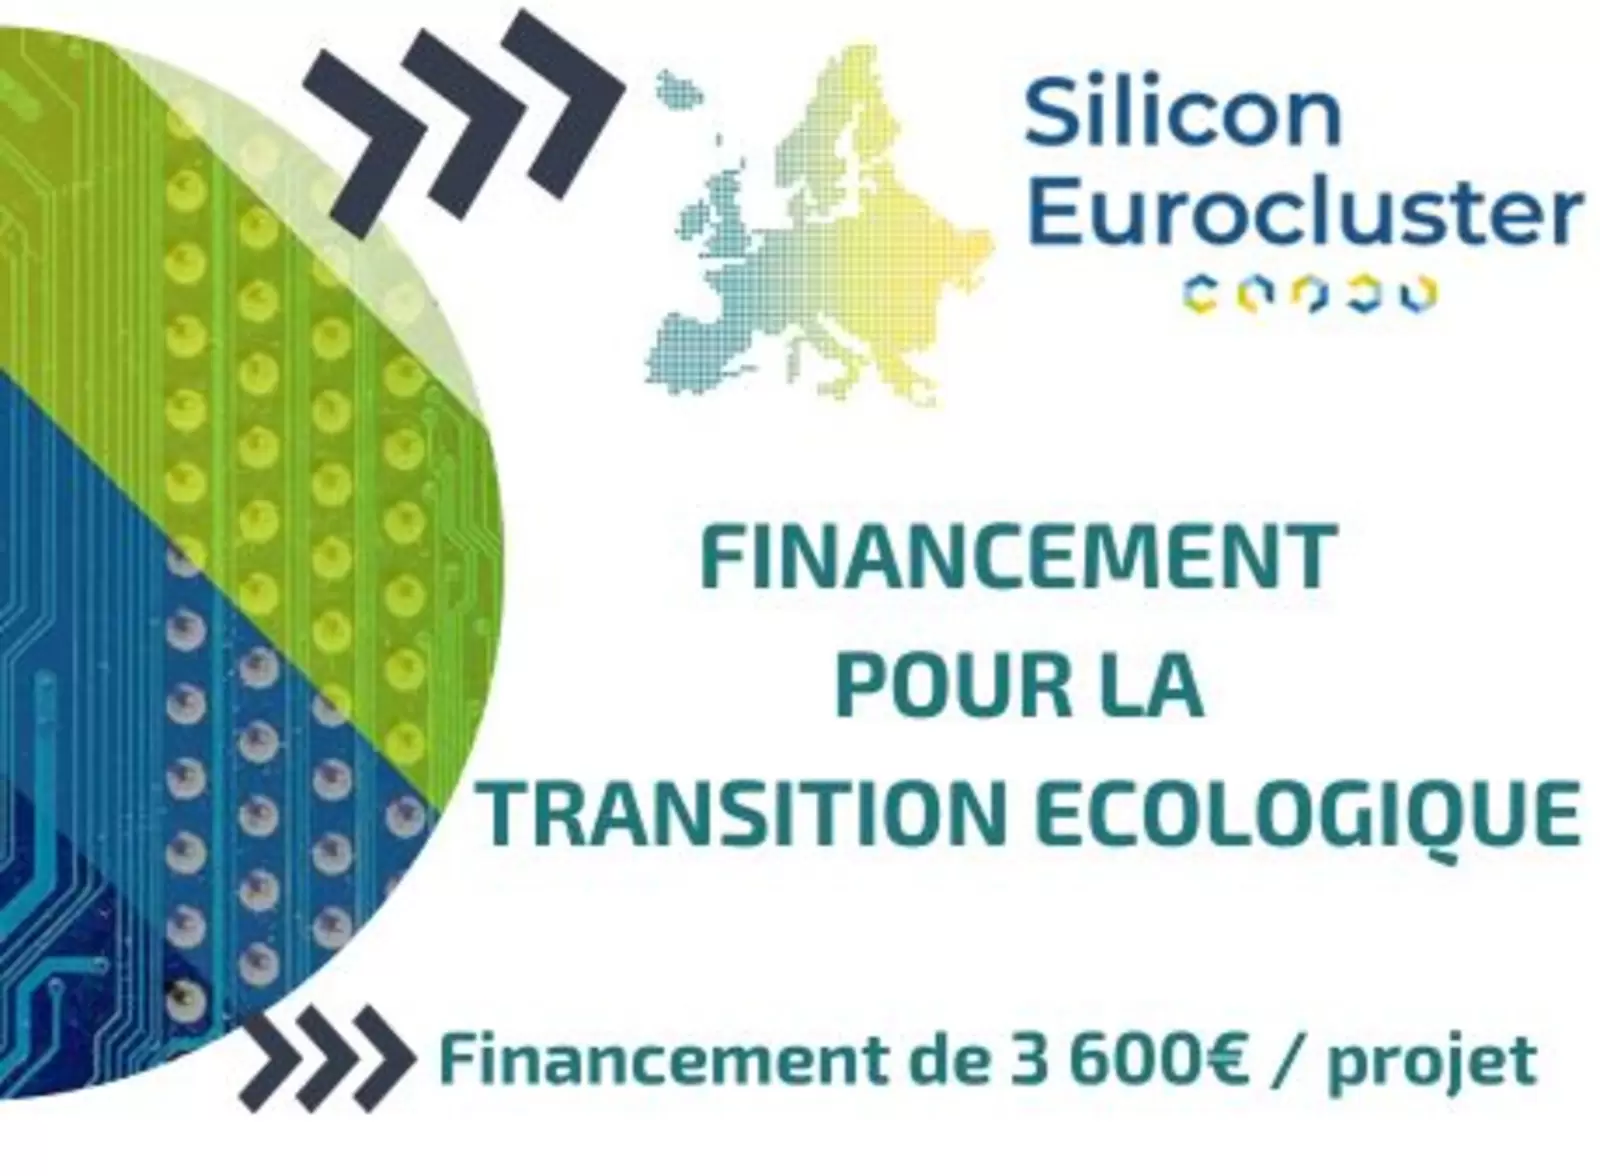 Financez votre transition écologique - Open call for Green Financial Support